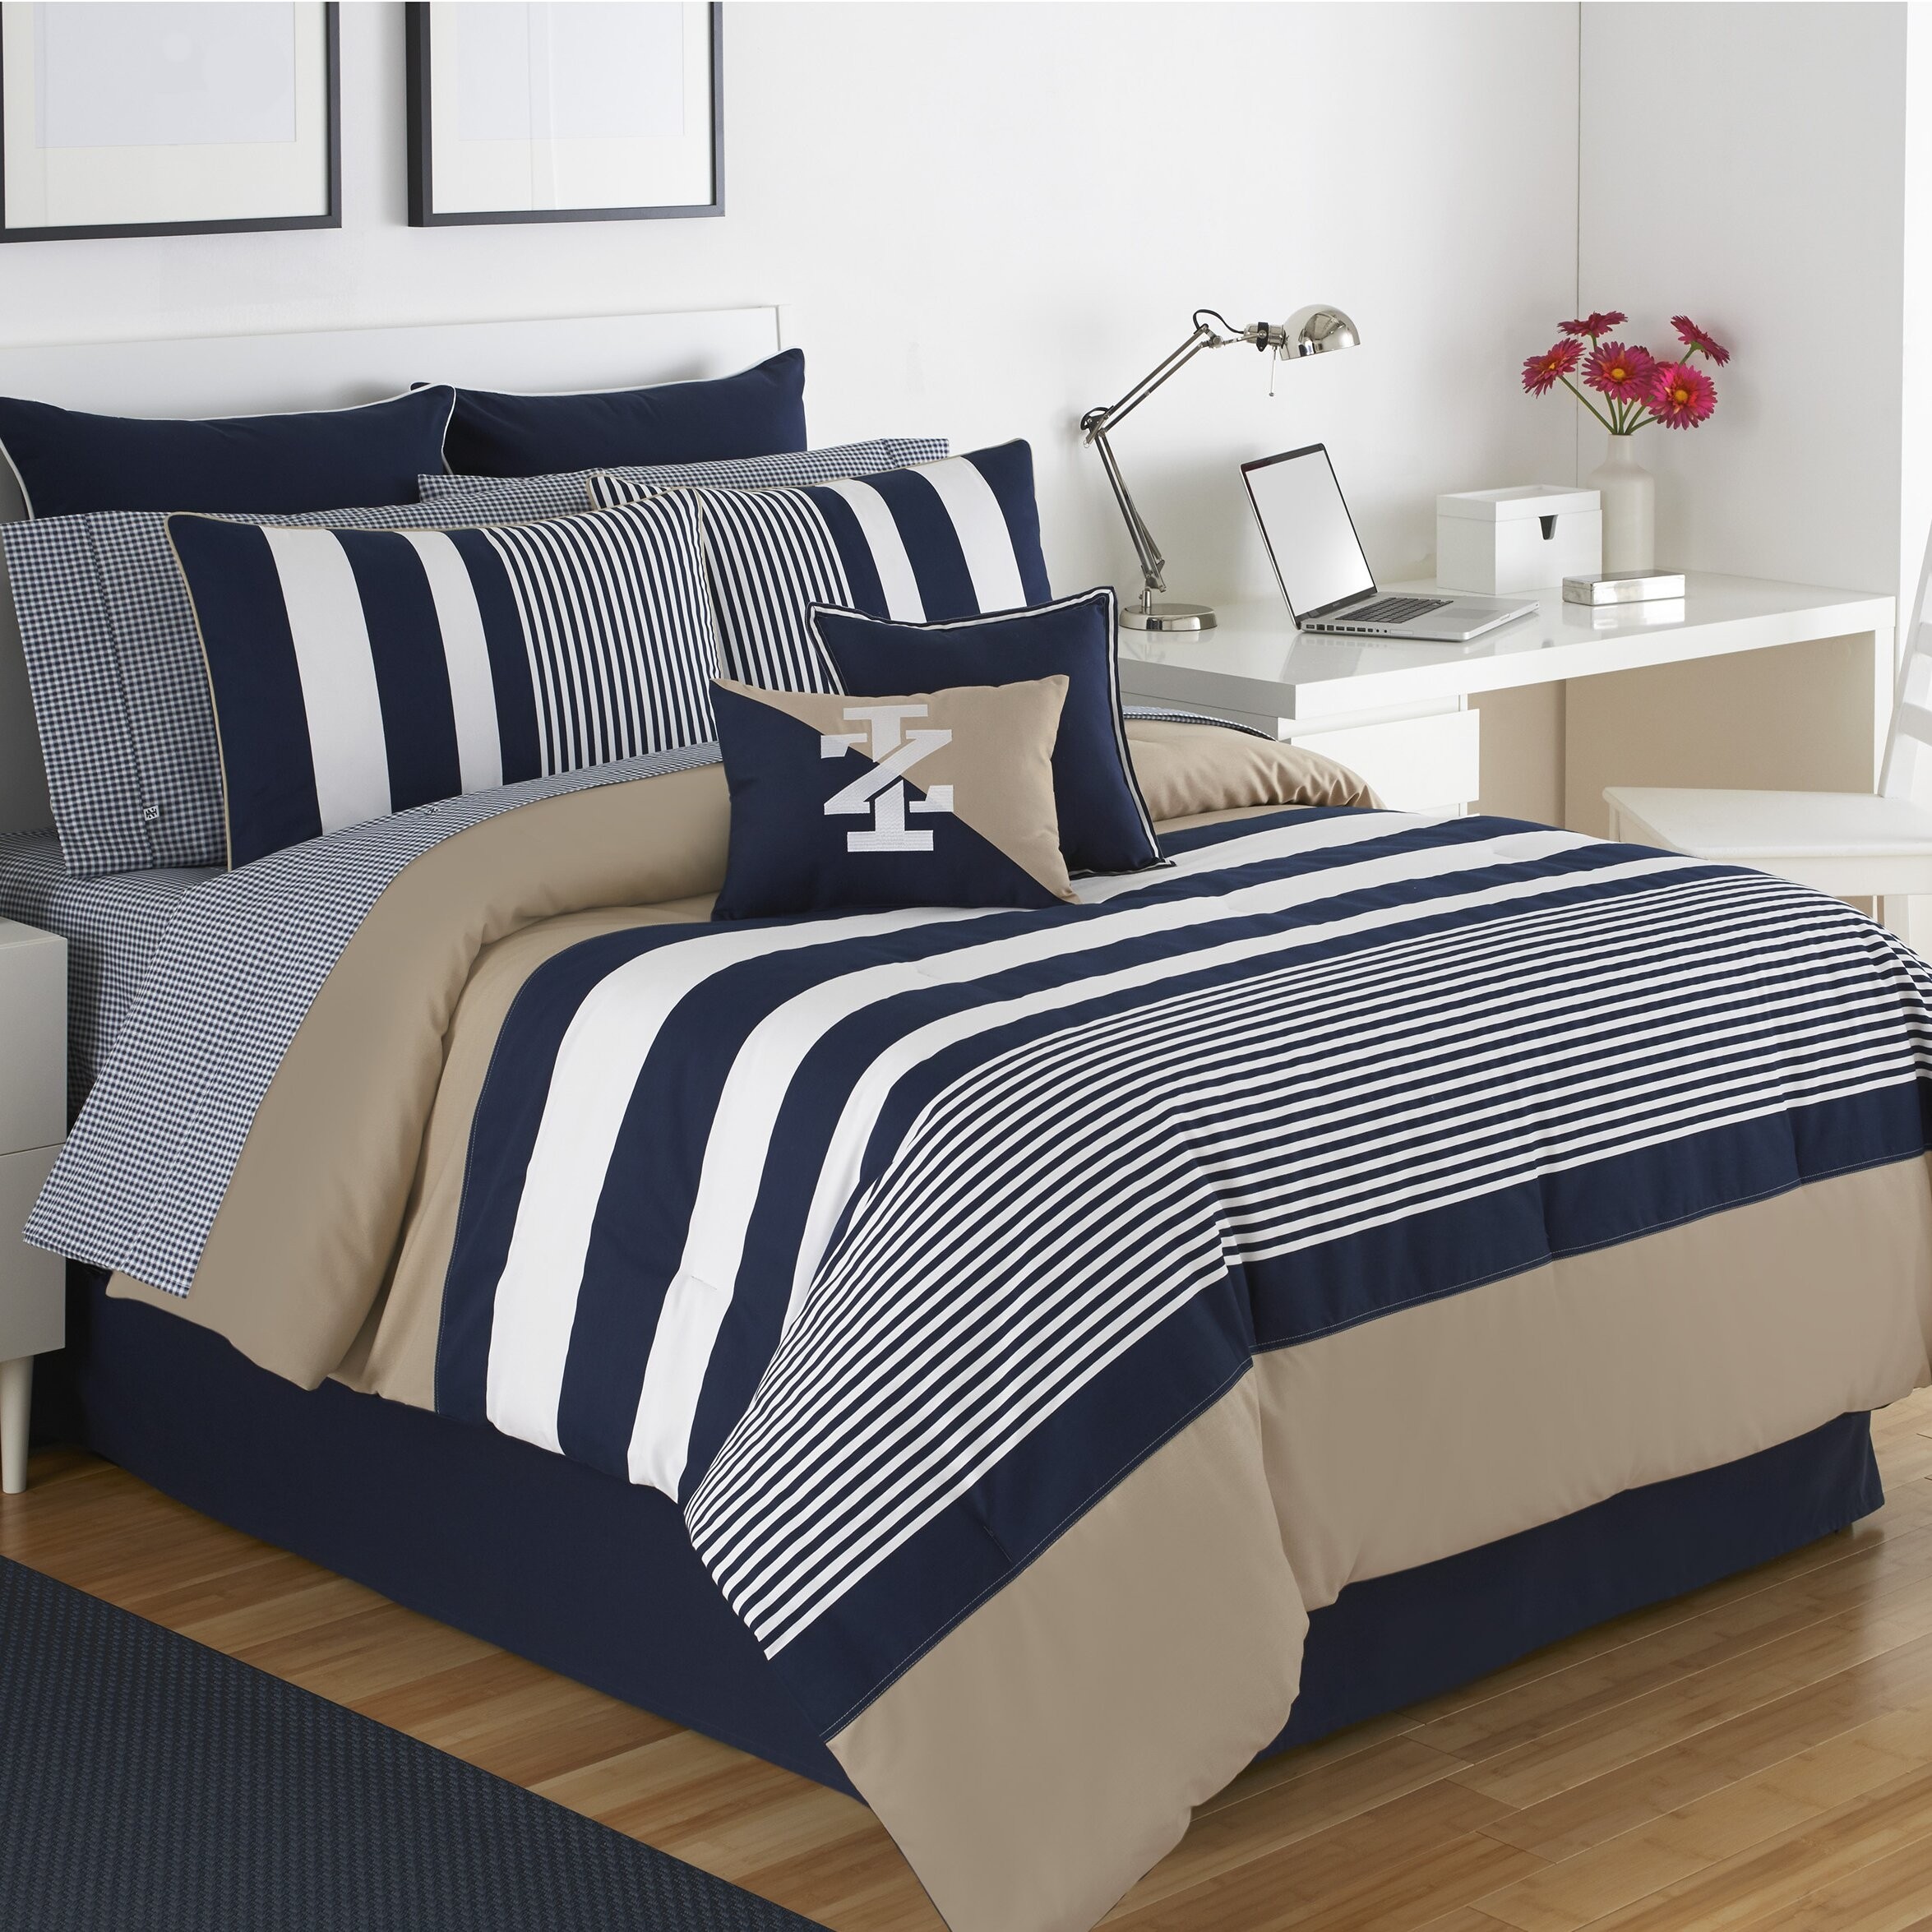 Izod classic stripe comforter set reviews